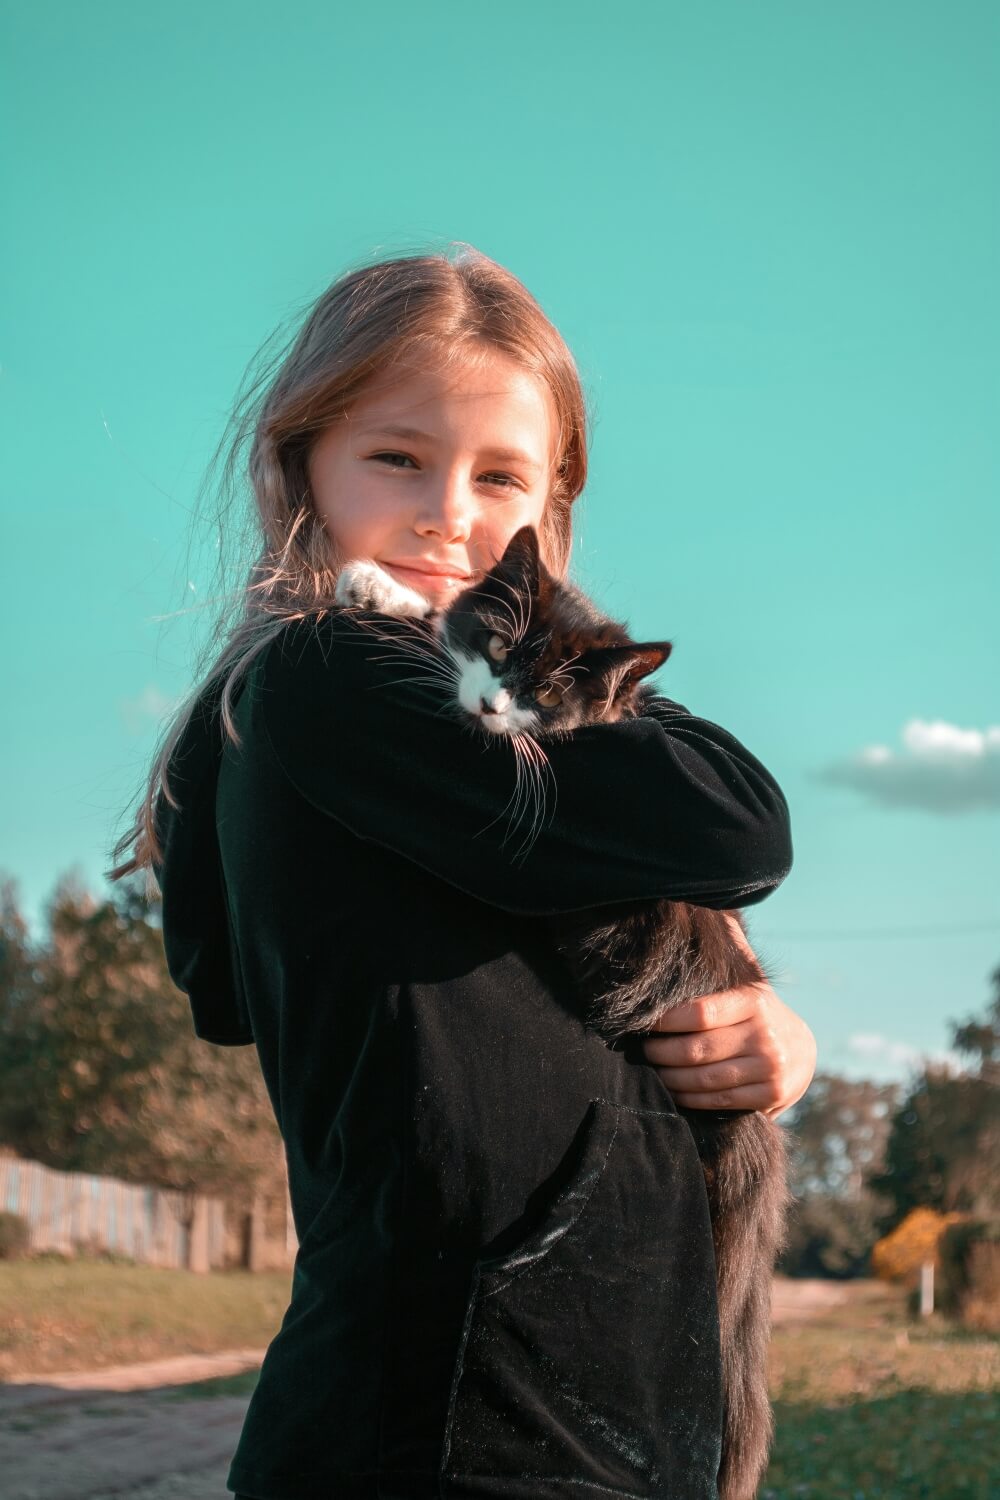 Child holding kitten